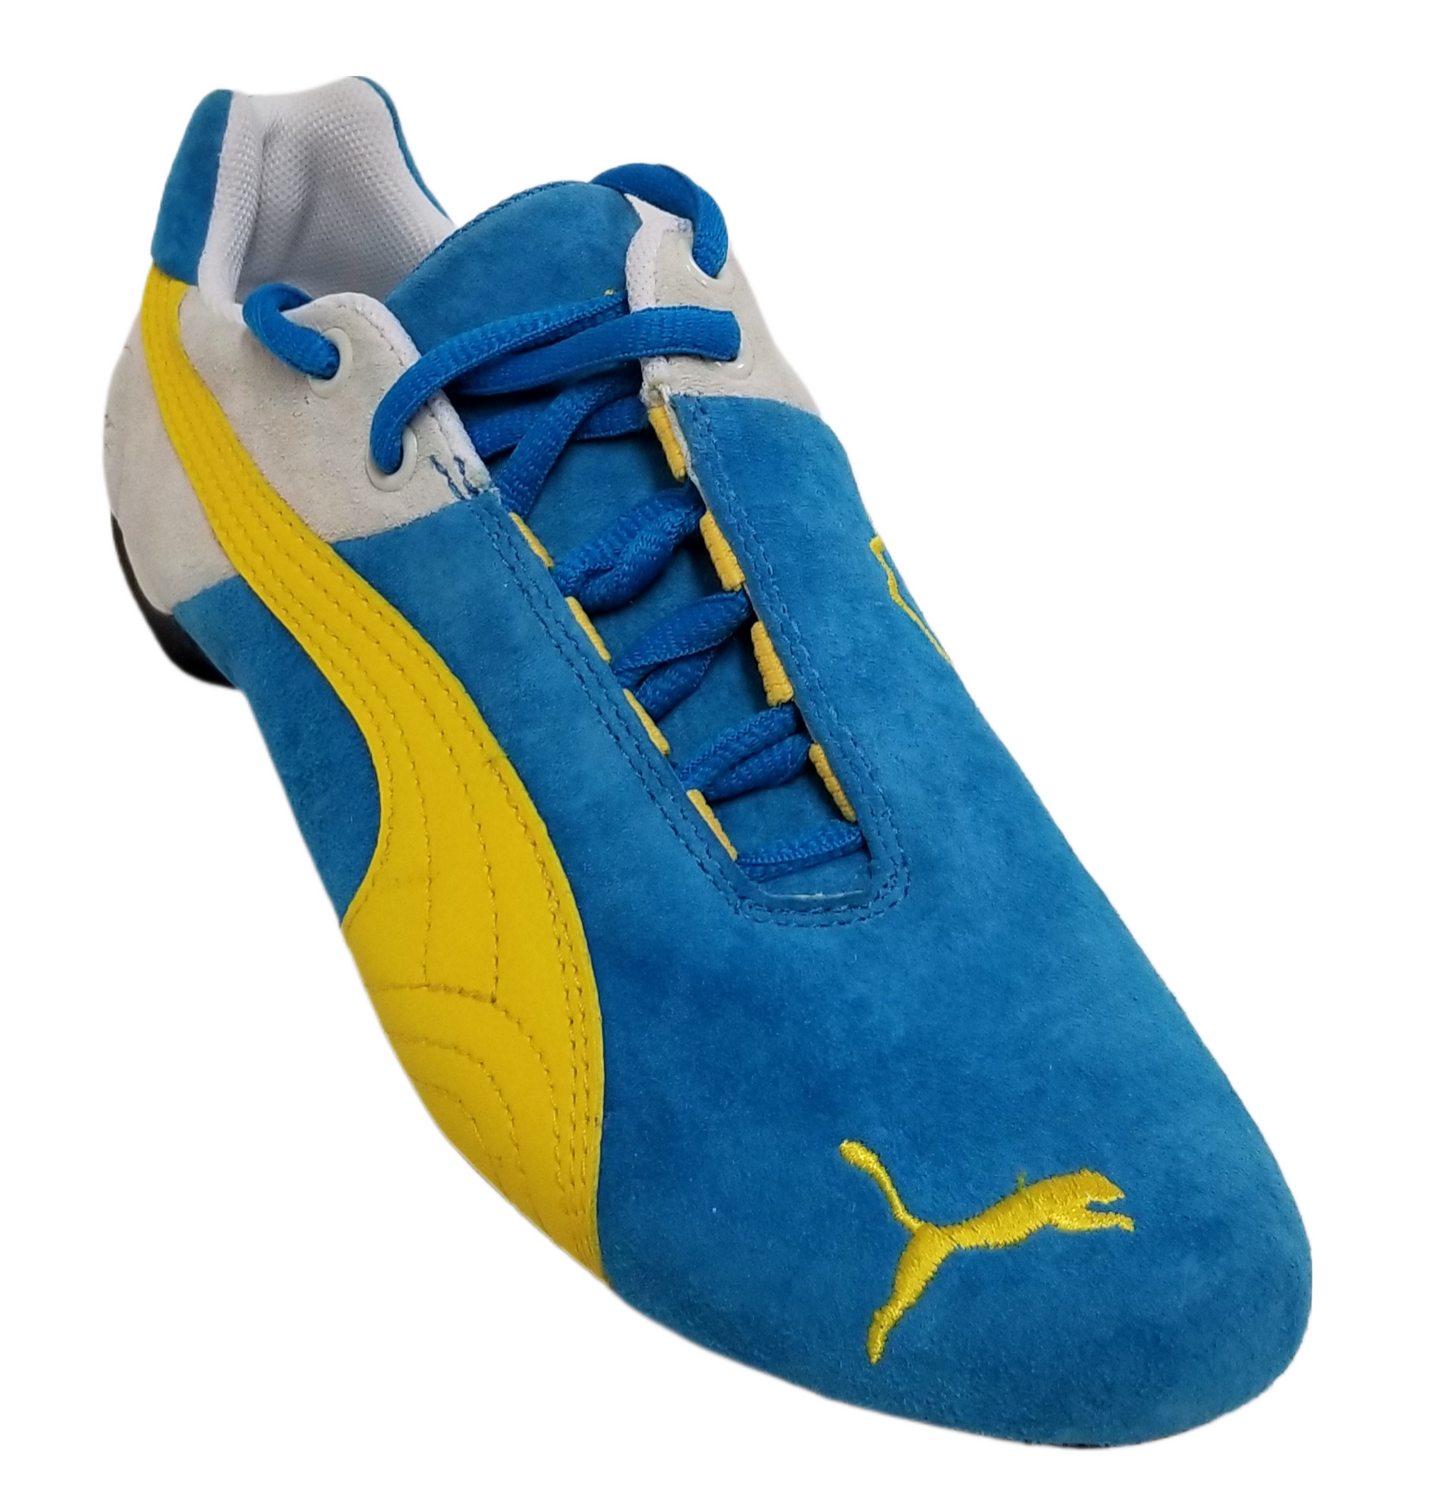 Puma Men Future Cat Low P Shoes Swedish Blue/Vibrant Yellow/Natural 300534-03